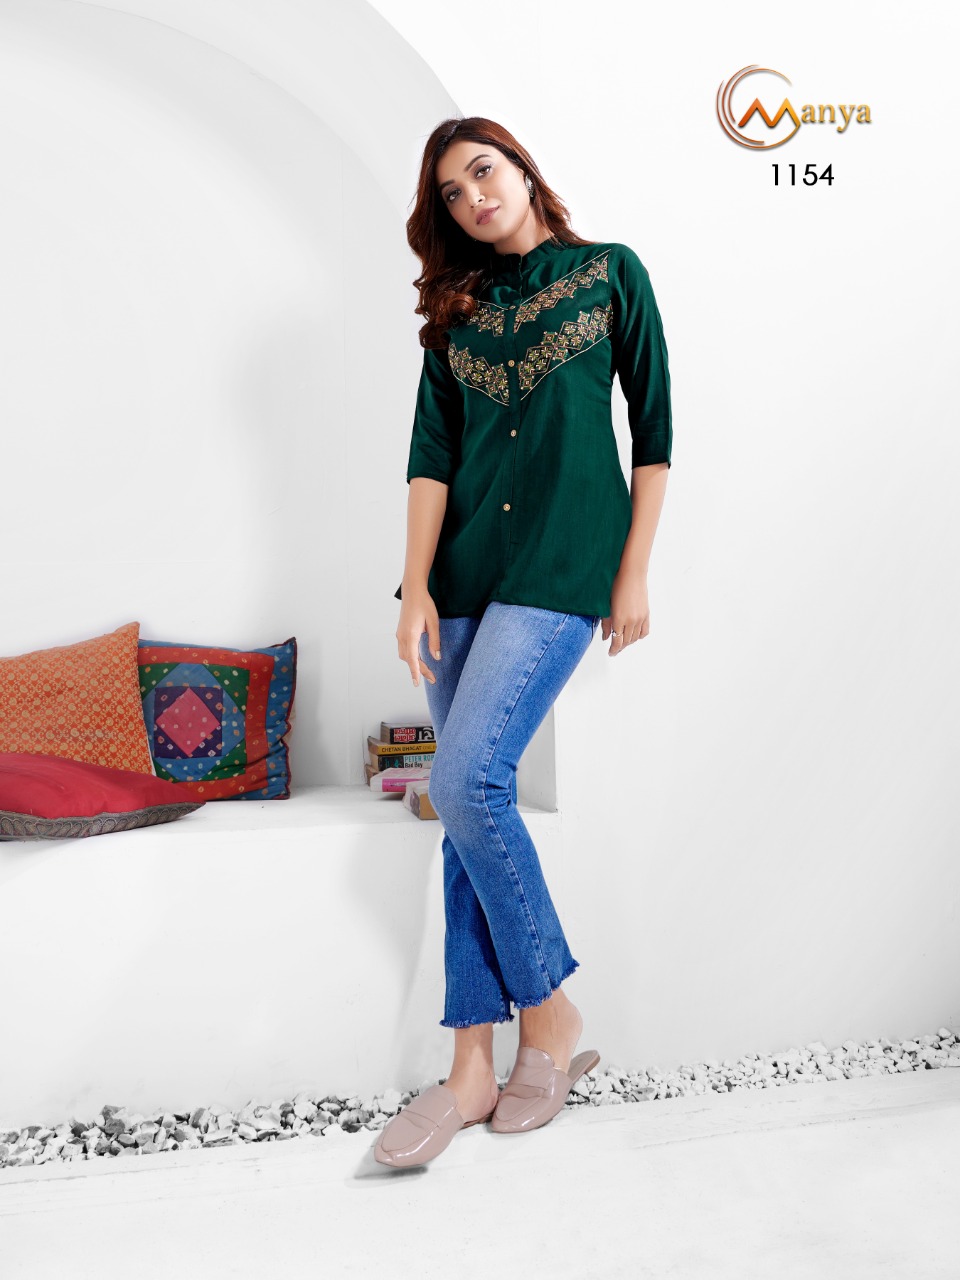 mansi fashion colors 2 viscose elegant short top catalog